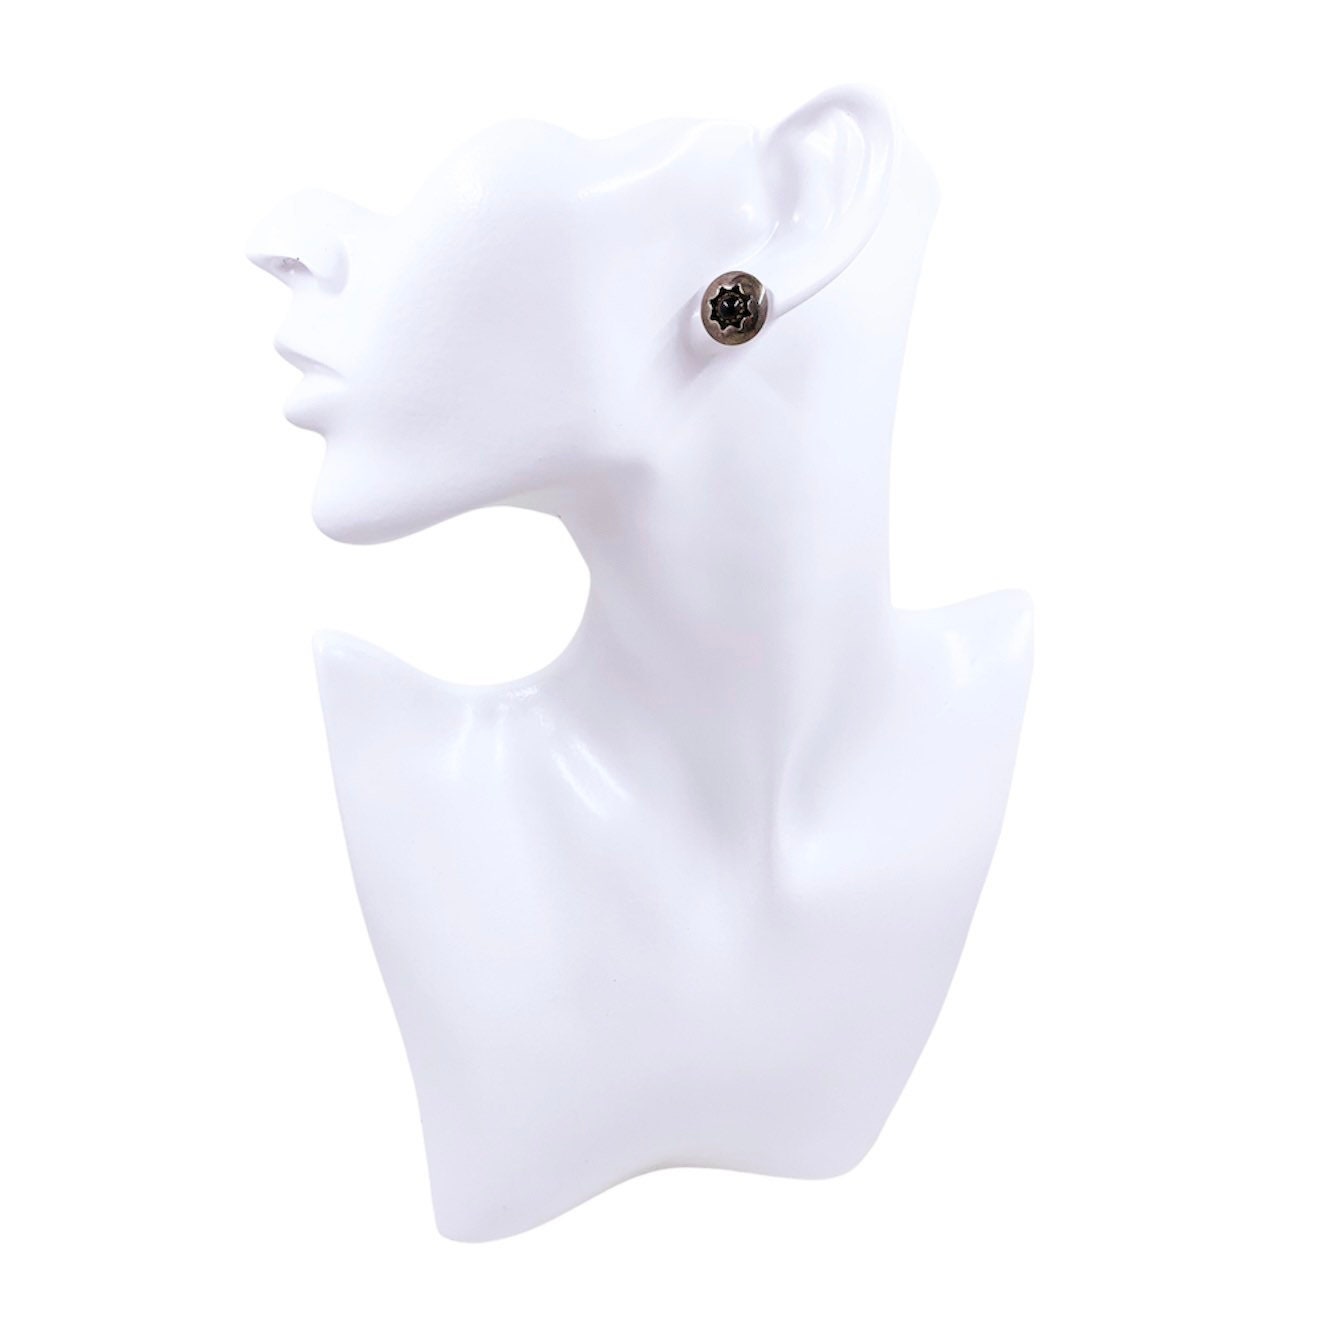 Vintage Silver Onyx Shadow Box Earrings | Silver Onyx Round Stud Earrings